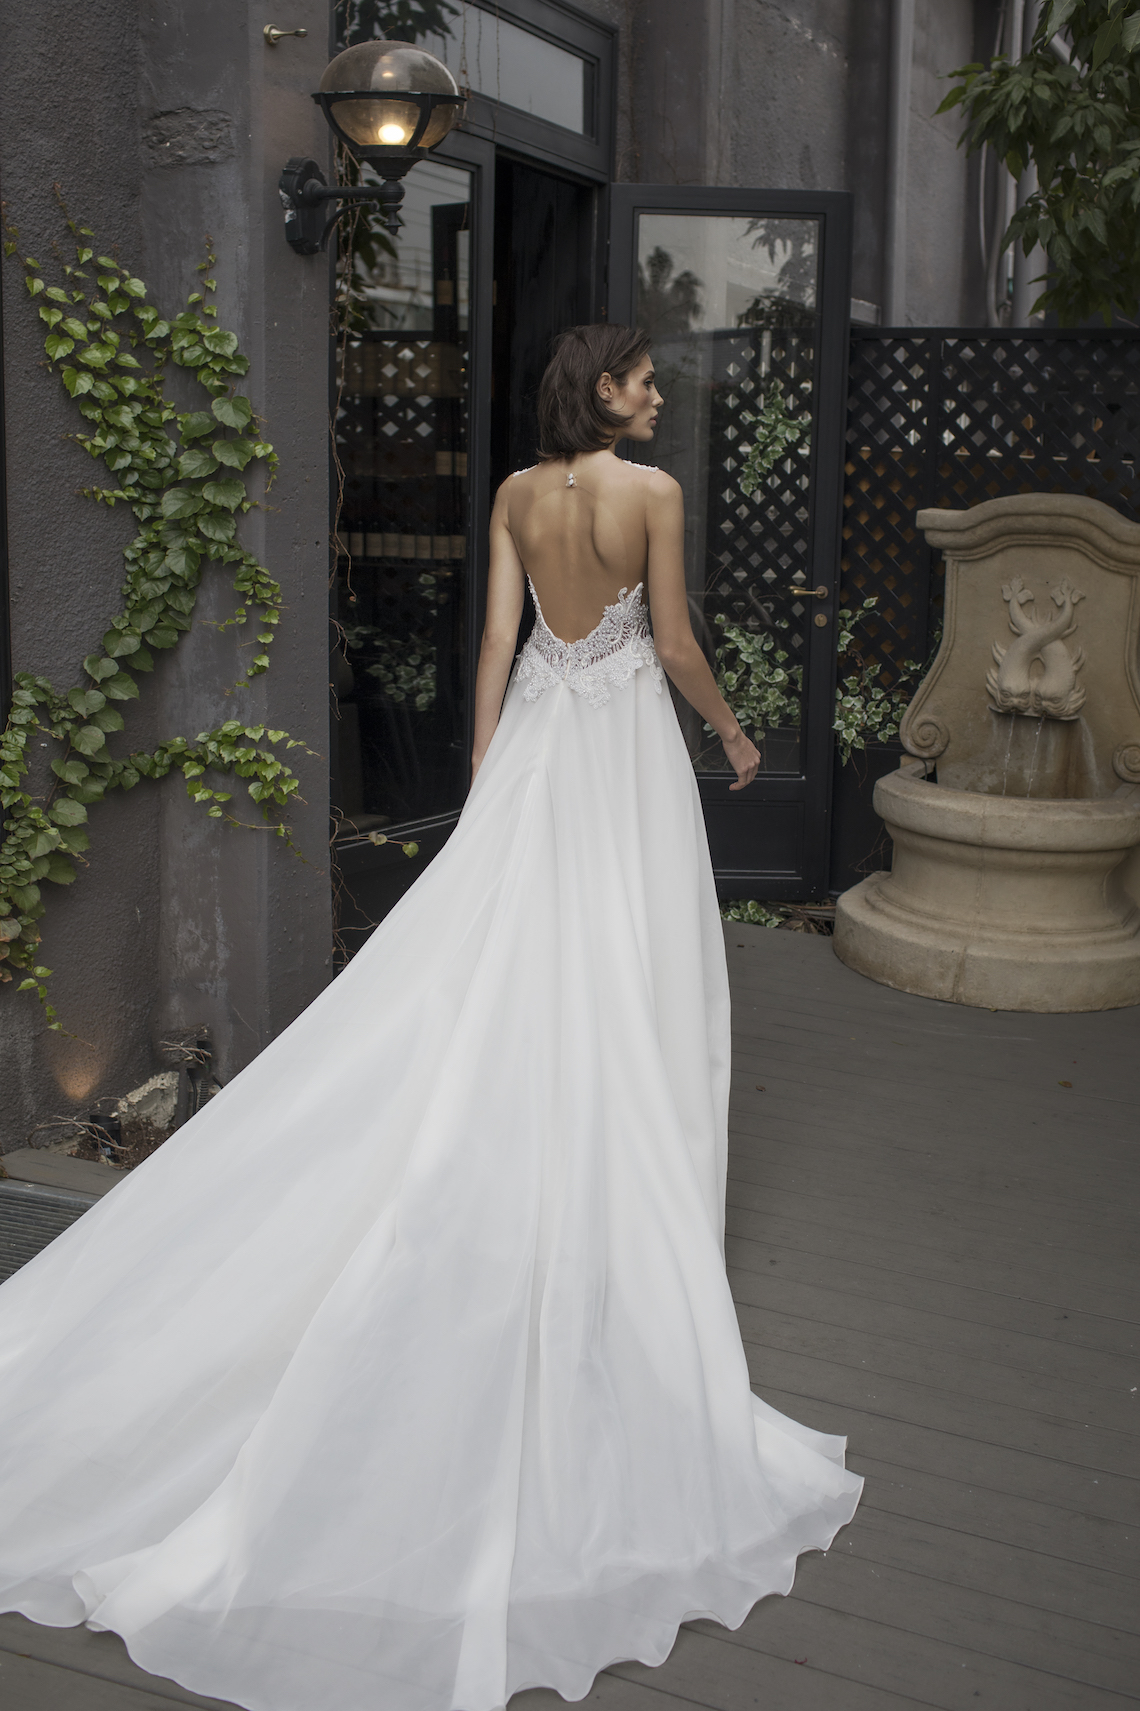 Riki Dalal Wedding Dress Collection 2018 20